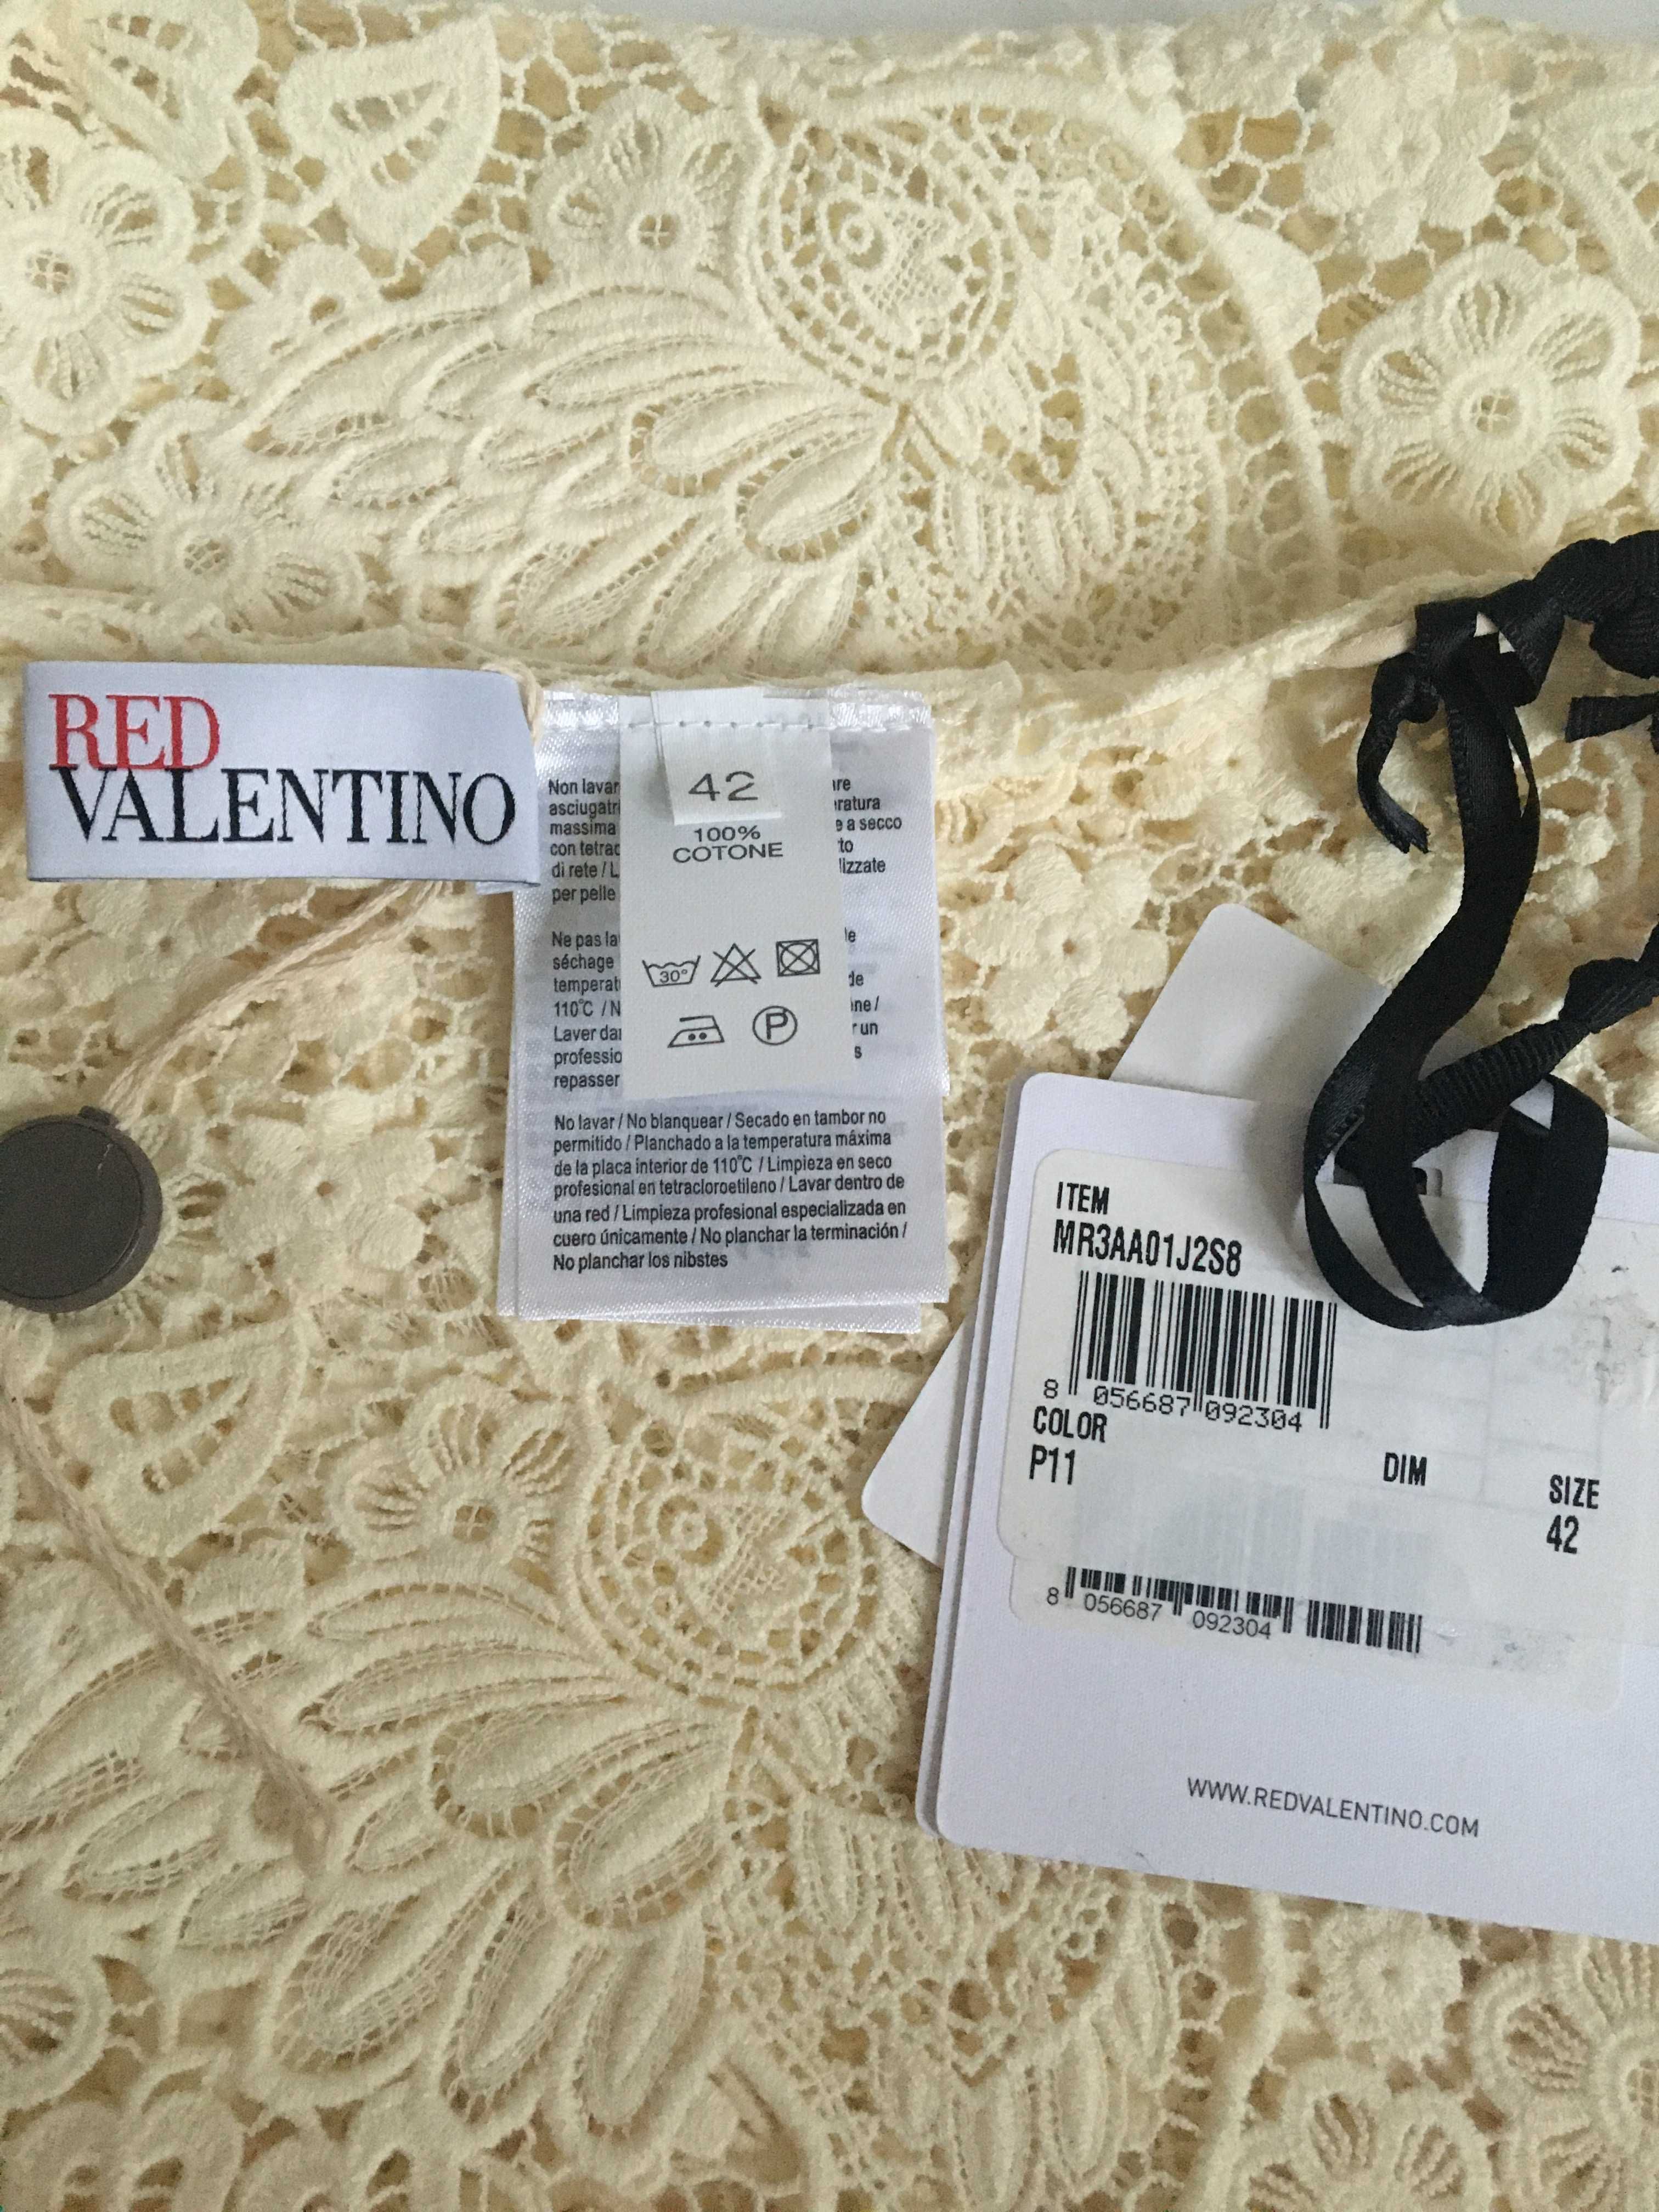 Red Valentino 100% oryginał bluzka koronkowa r. S/M